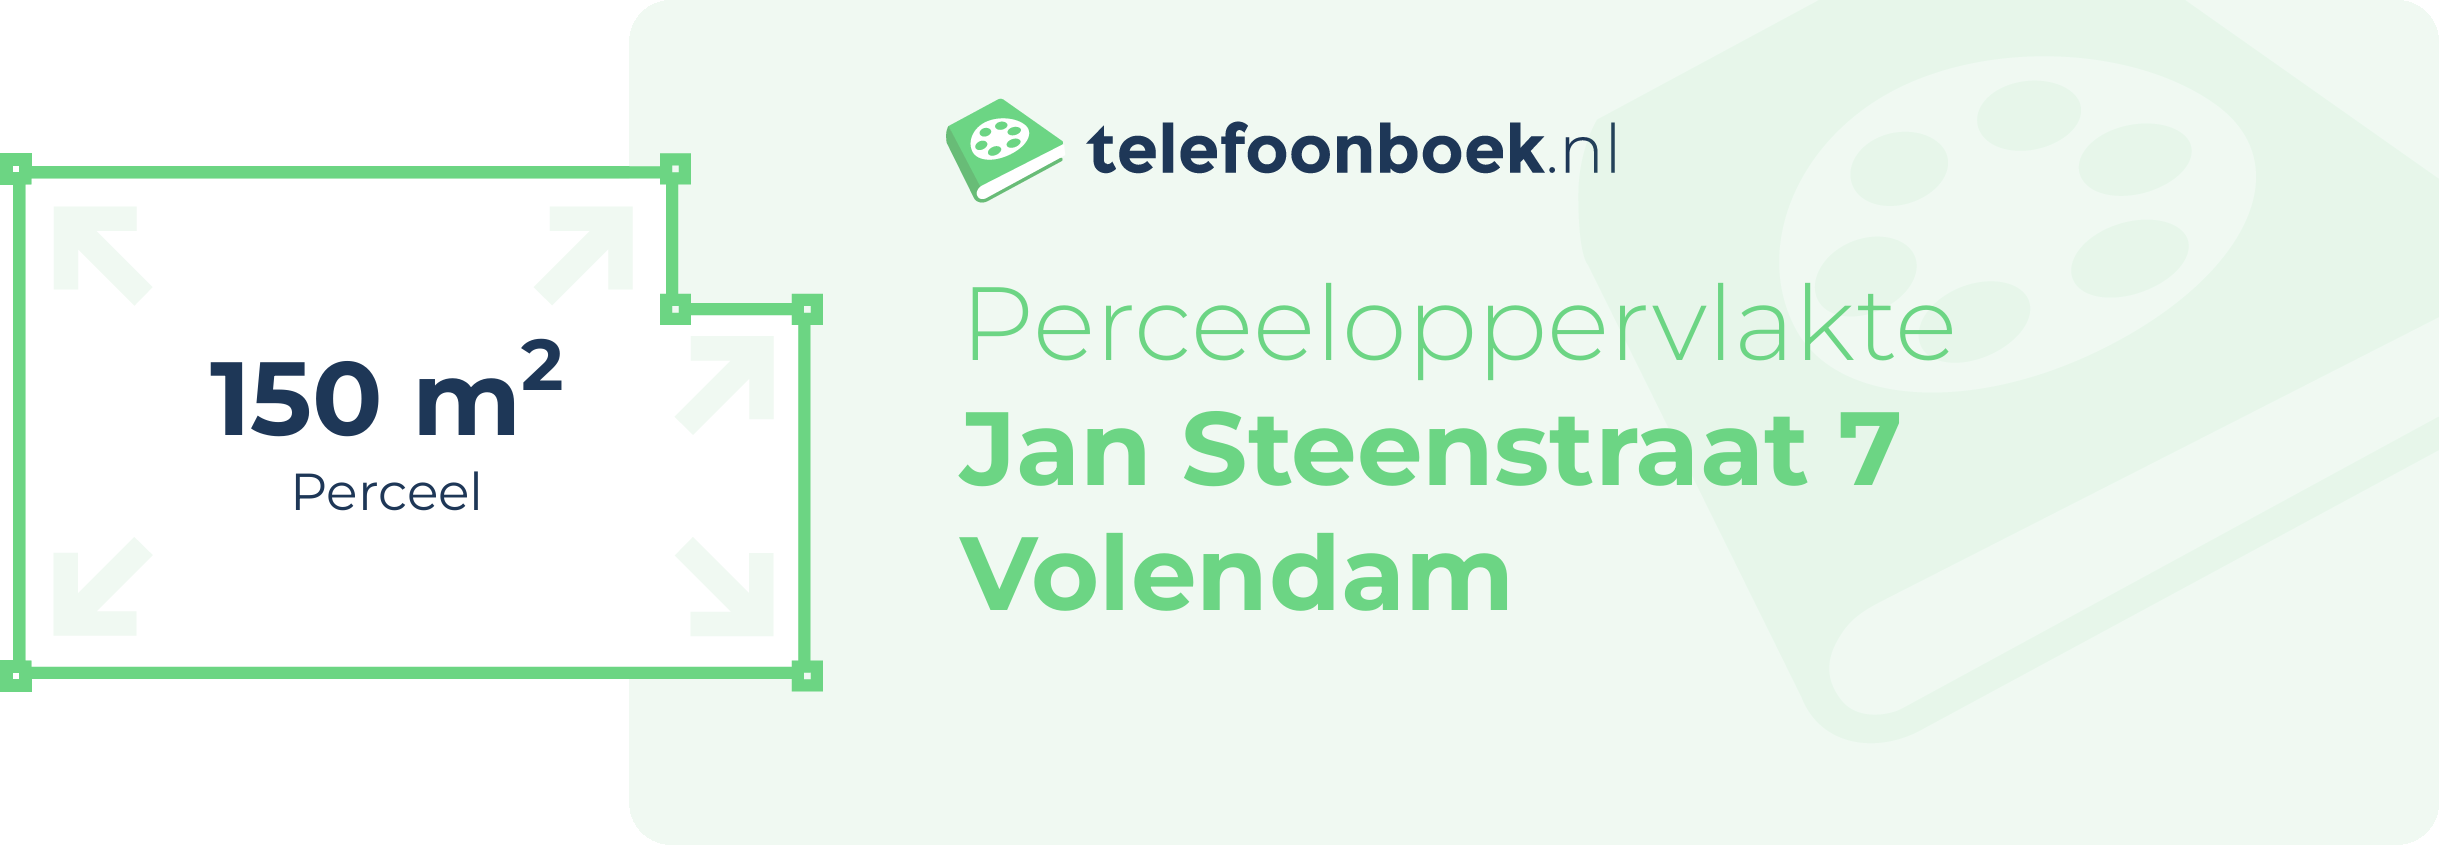 Perceeloppervlakte Jan Steenstraat 7 Volendam